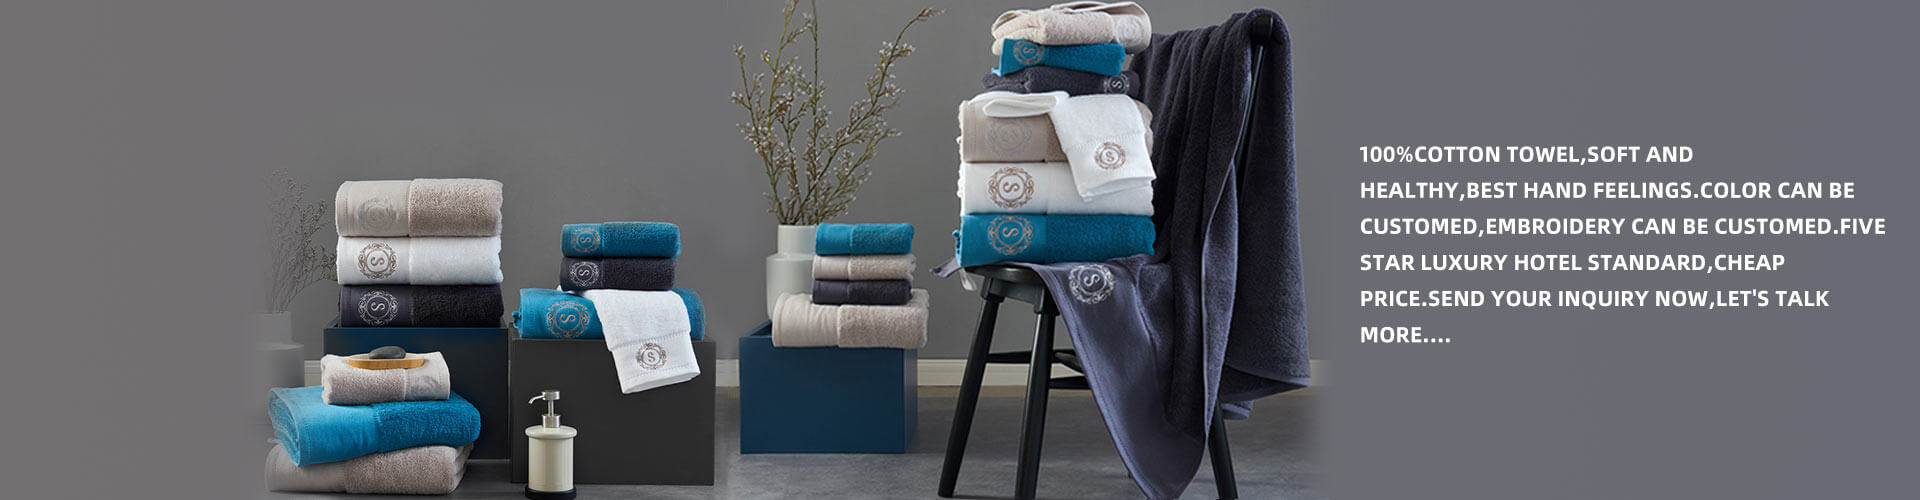 Winner Bedding Set Archives - Hotel Cotton Towel,Hotel Bath Towel,100%Cotton Towe